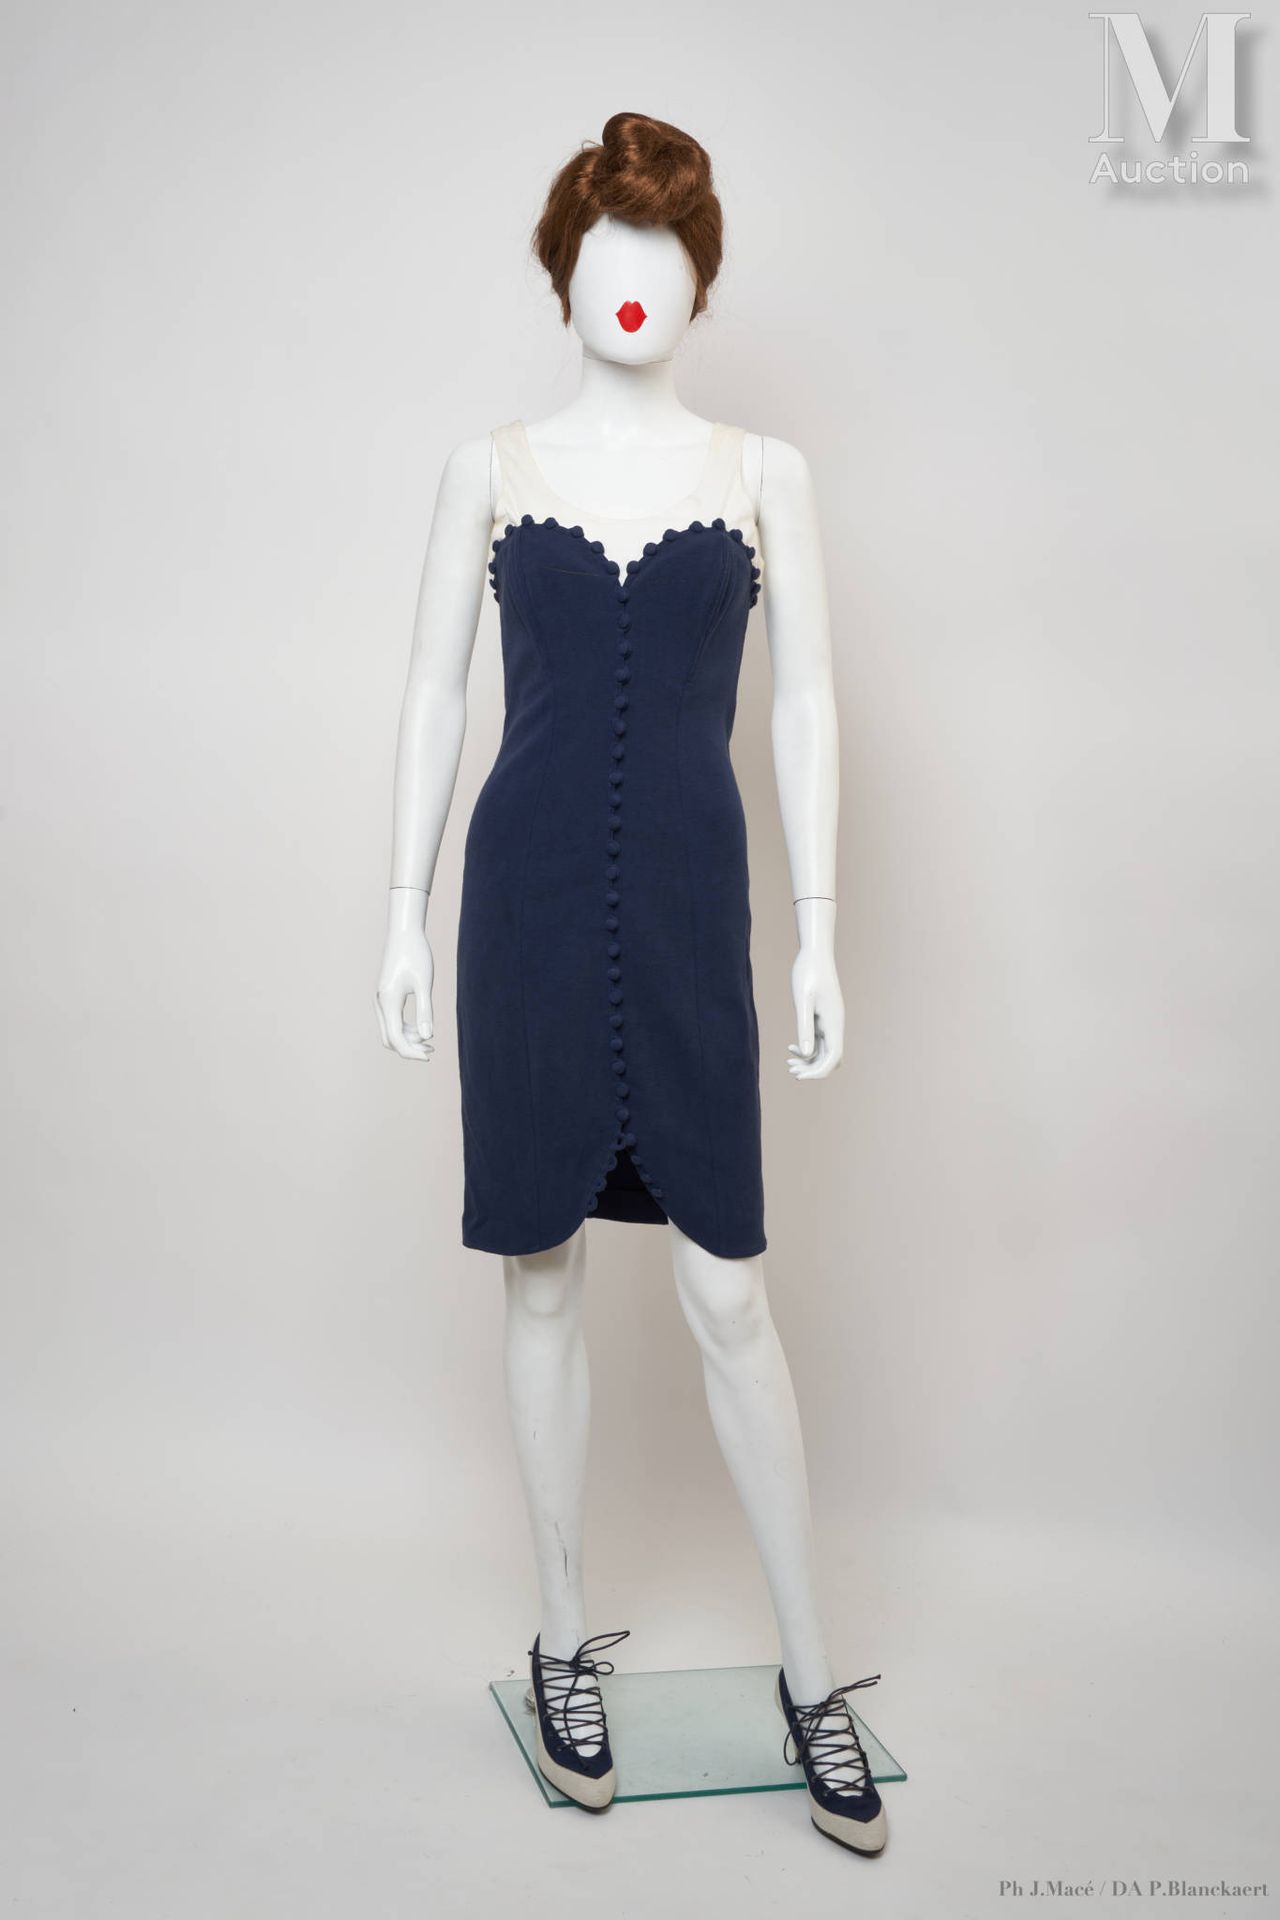 CHANTAL THOMASS - Printemps-été 1989 Dress
in navy stretch cotton over a poplin &hellip;